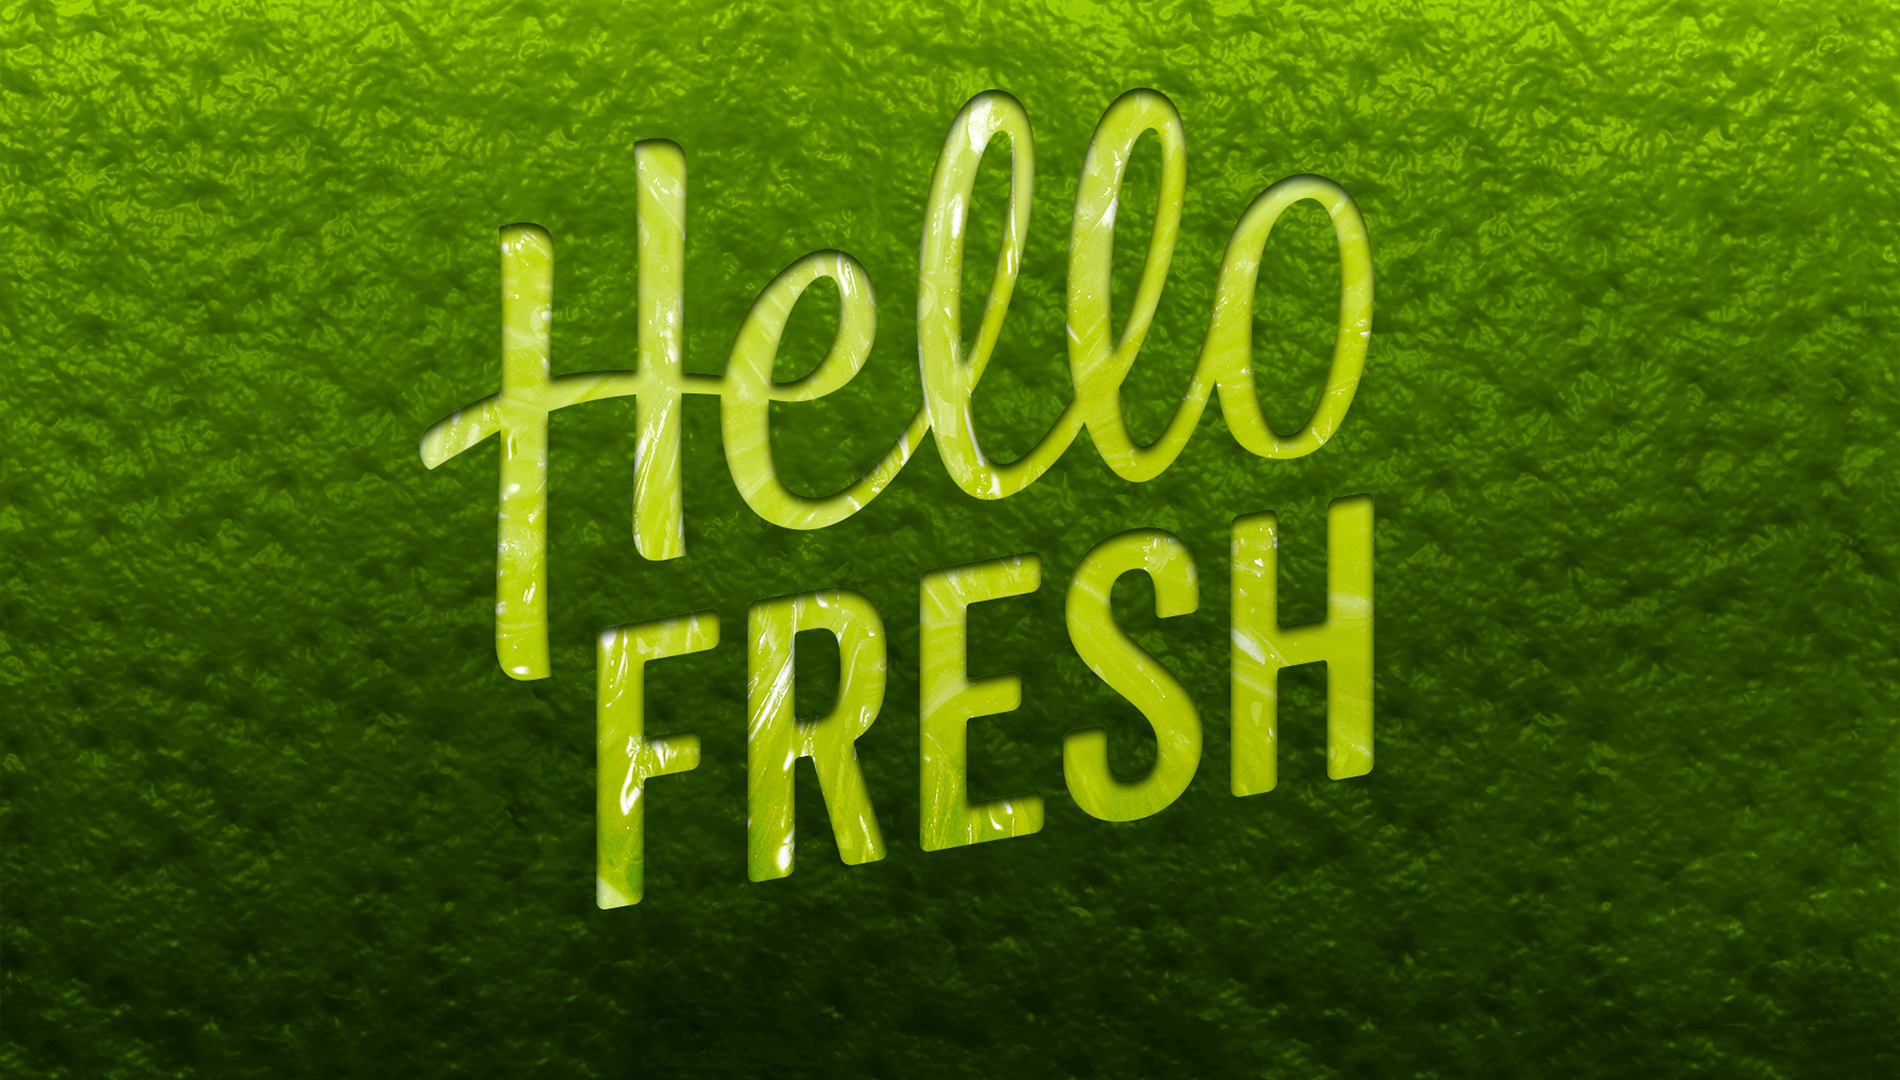 HelloFresh branding on limeskin